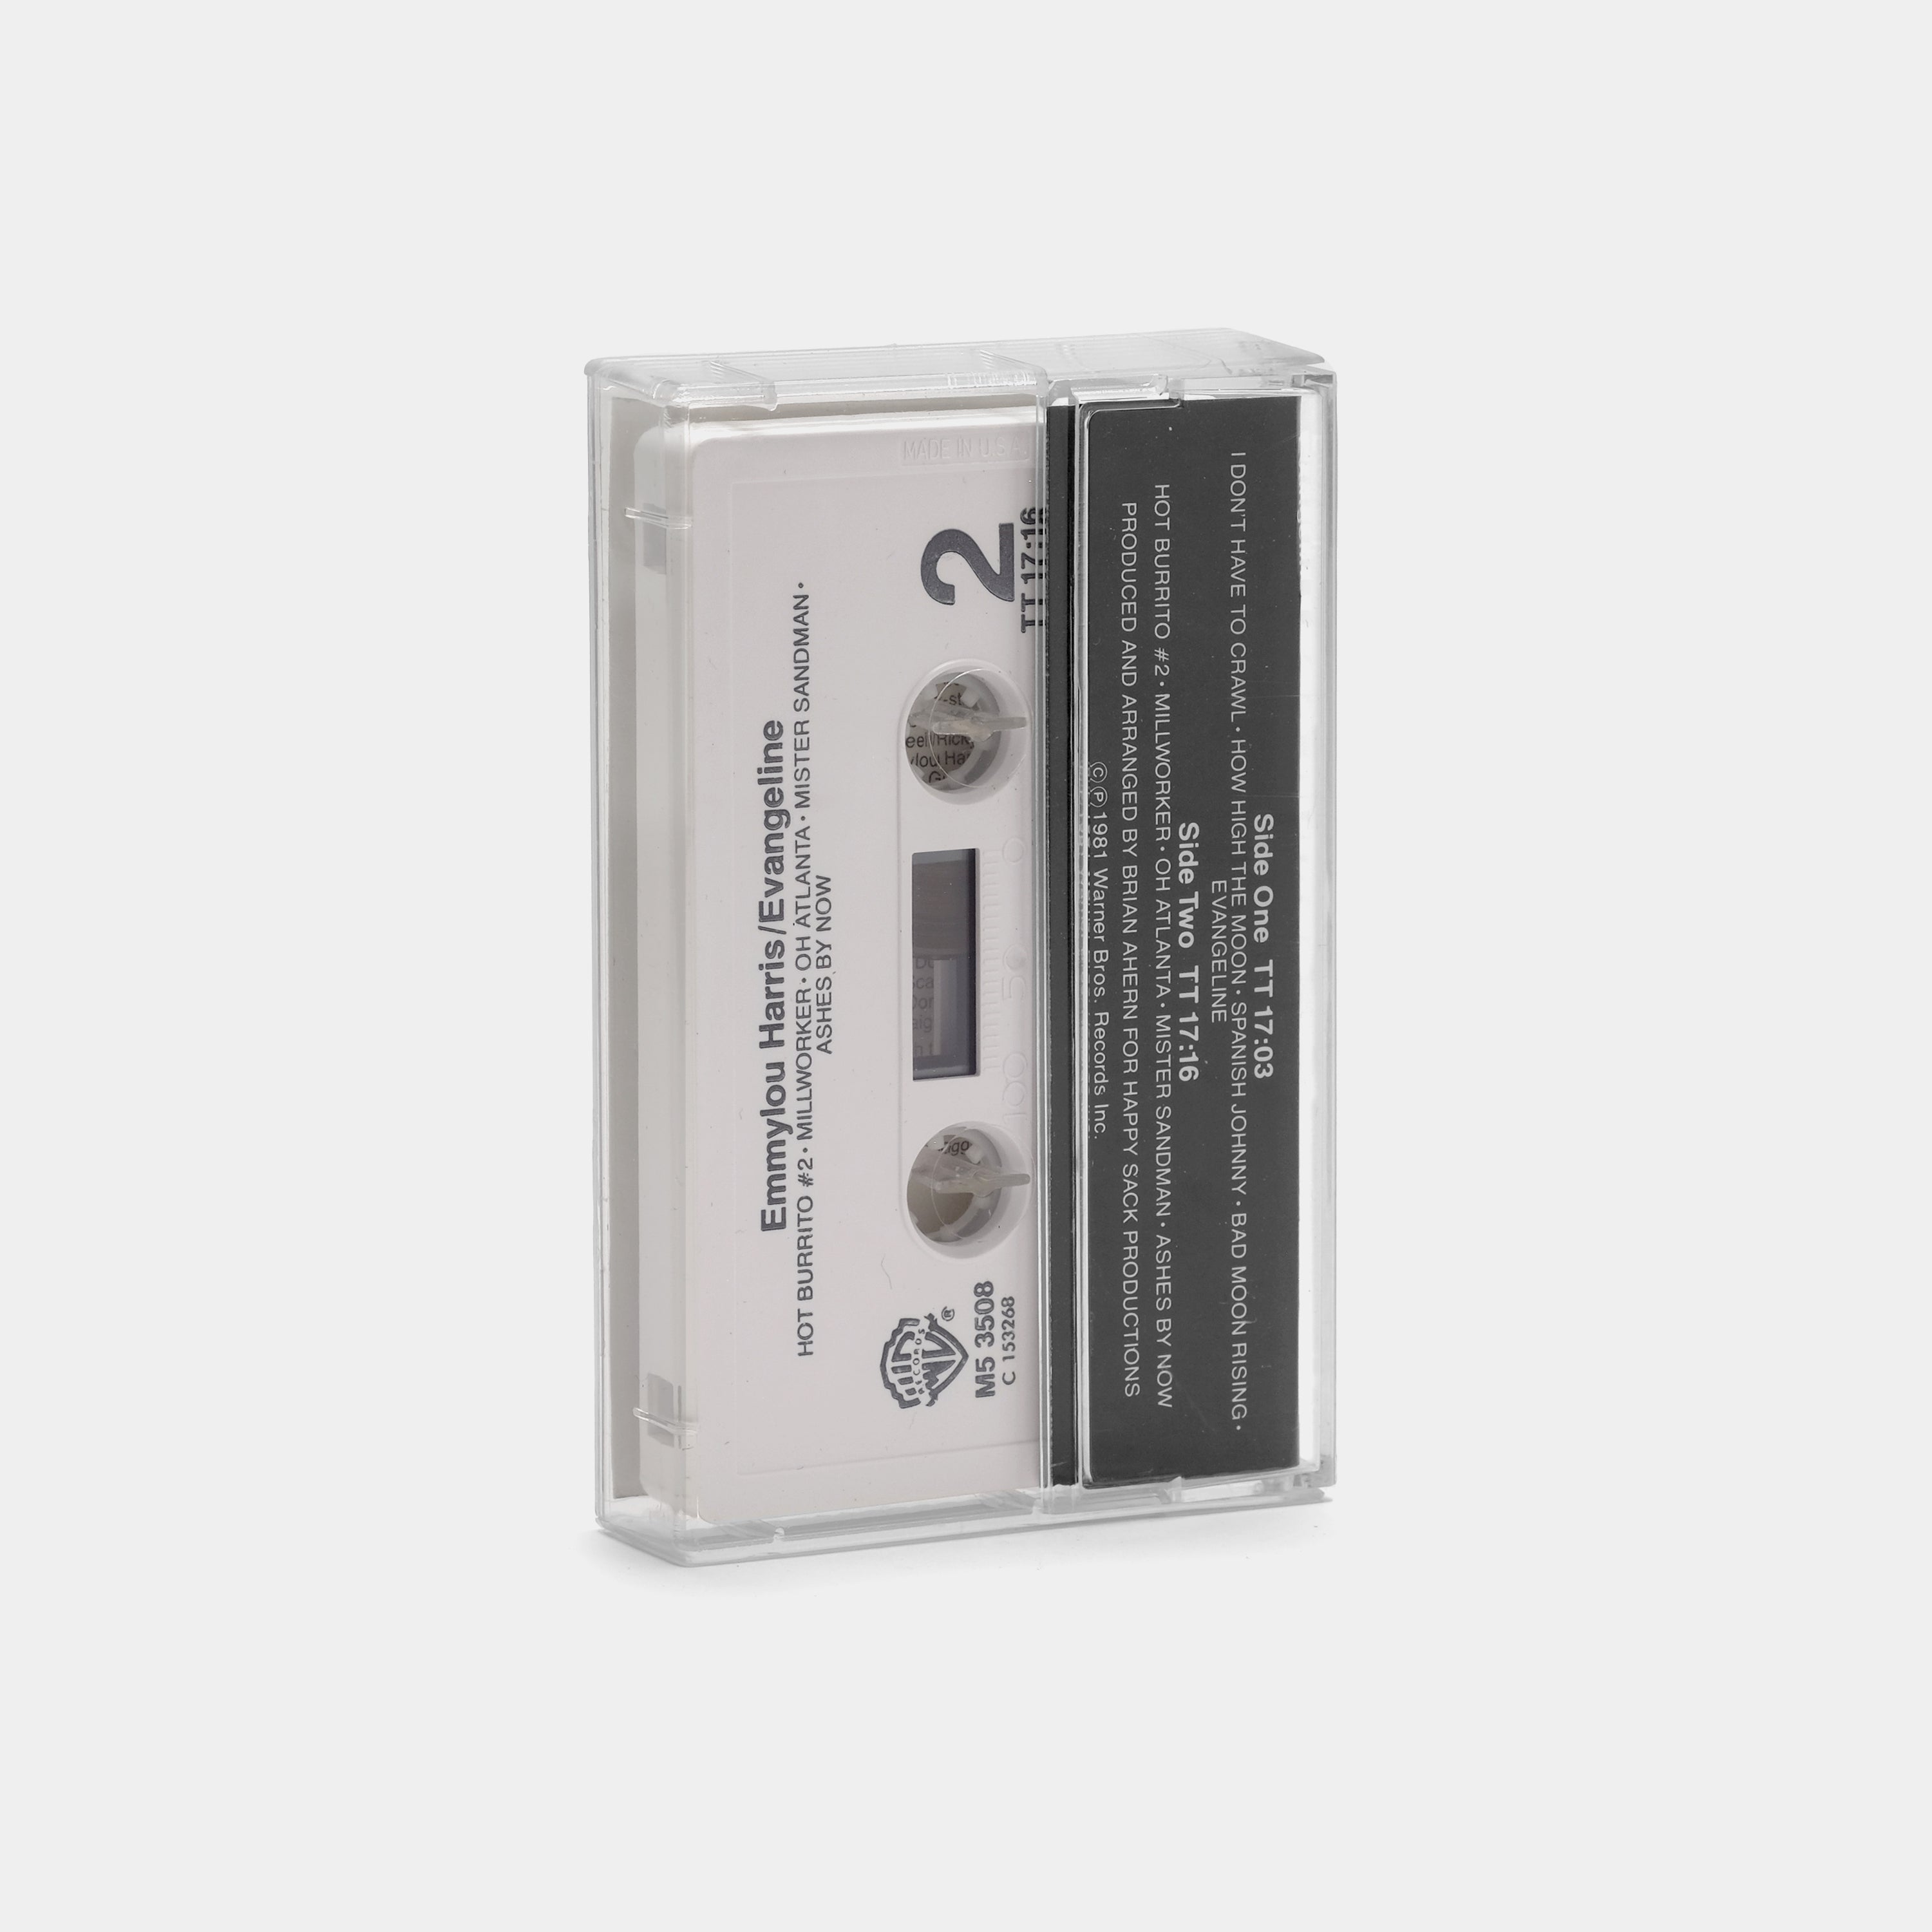 Emmylou Harris - Evangeline Cassette Tape